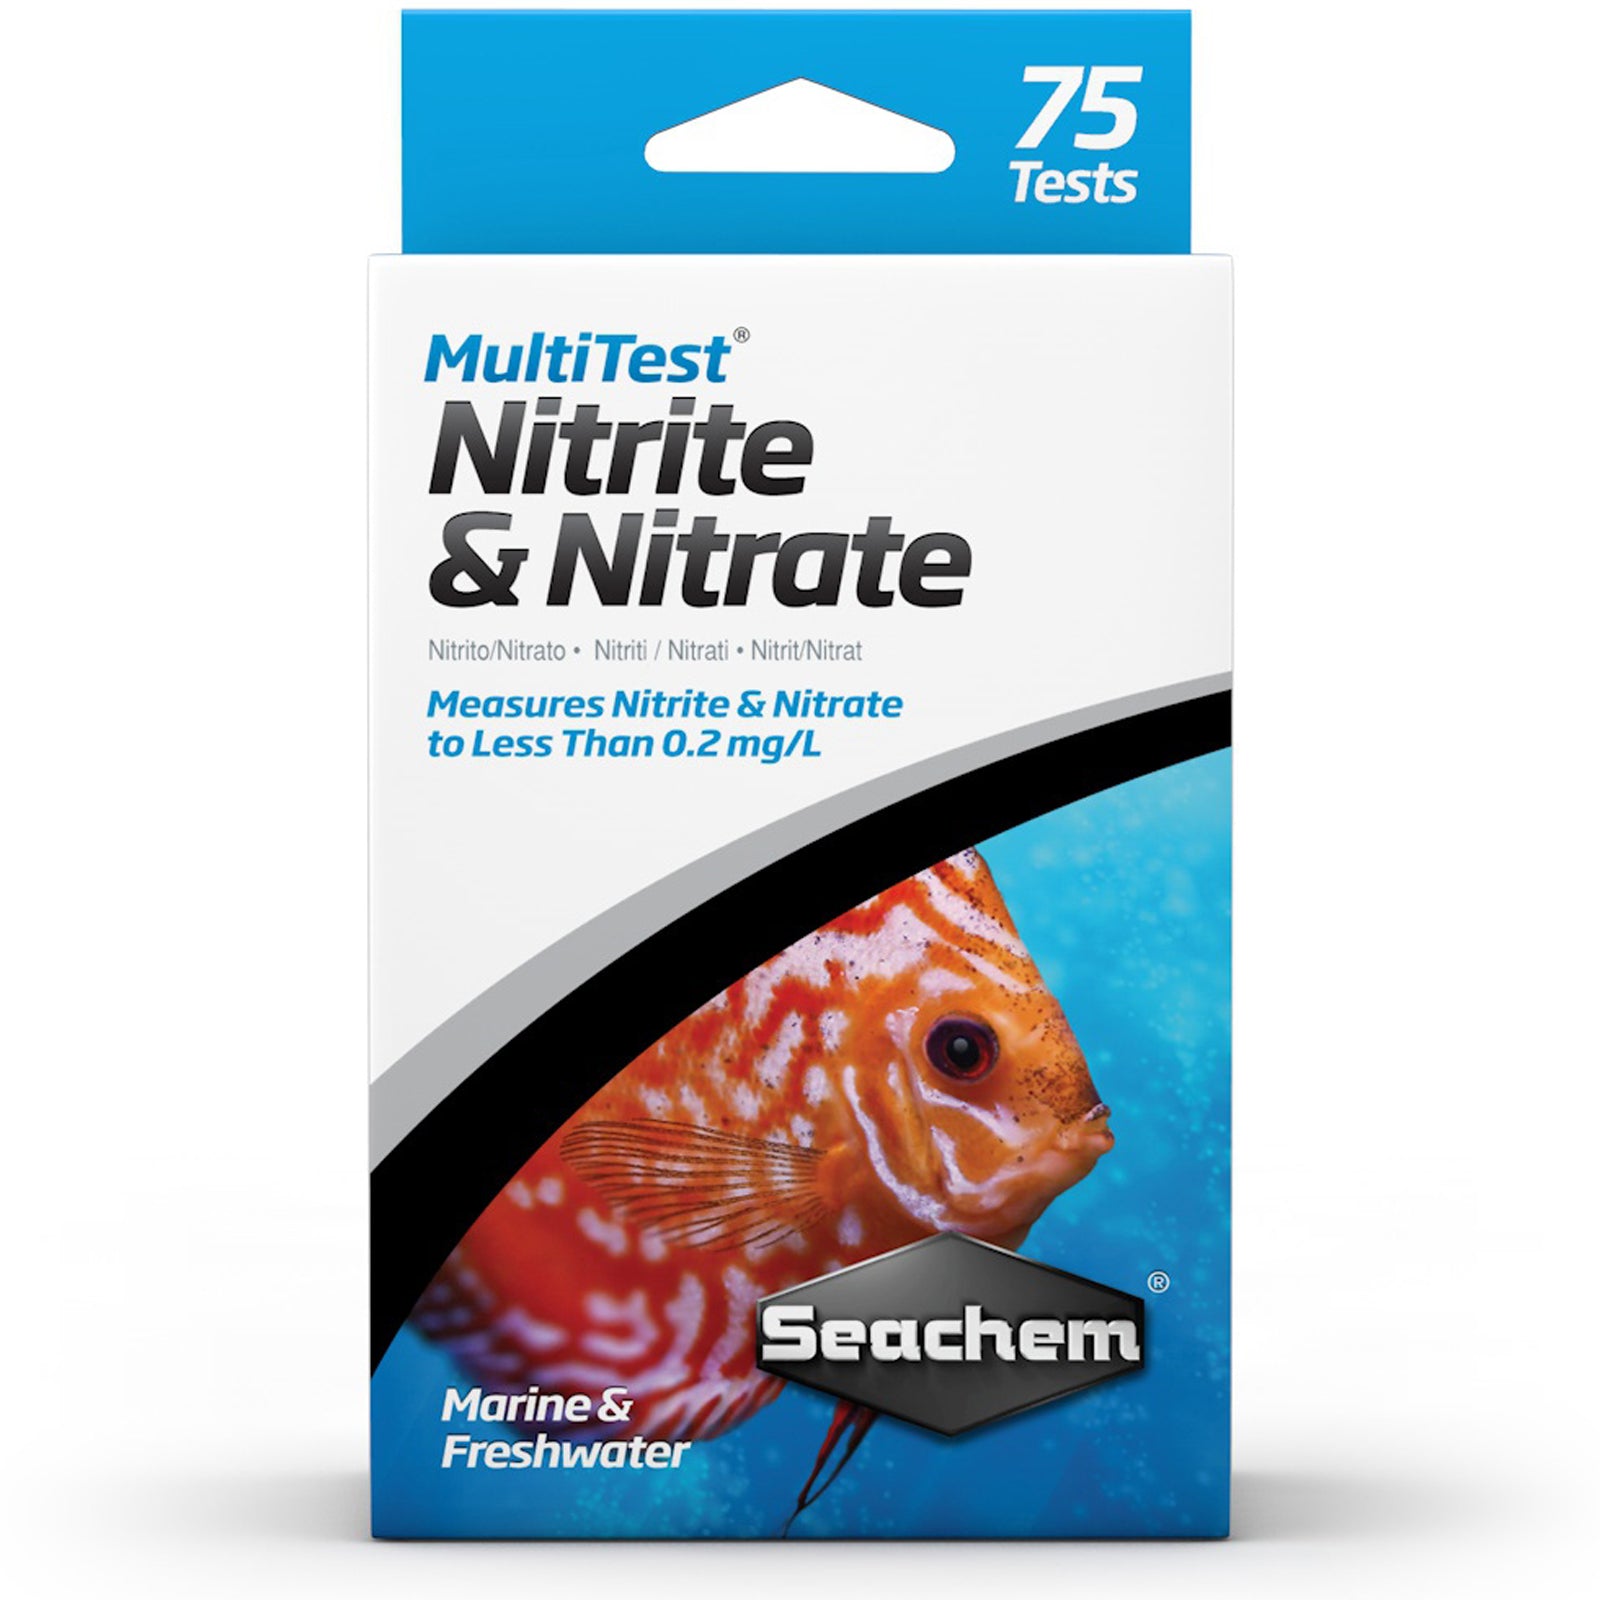 Seachem MultiTest Nitrite & Nitrate Test Kit